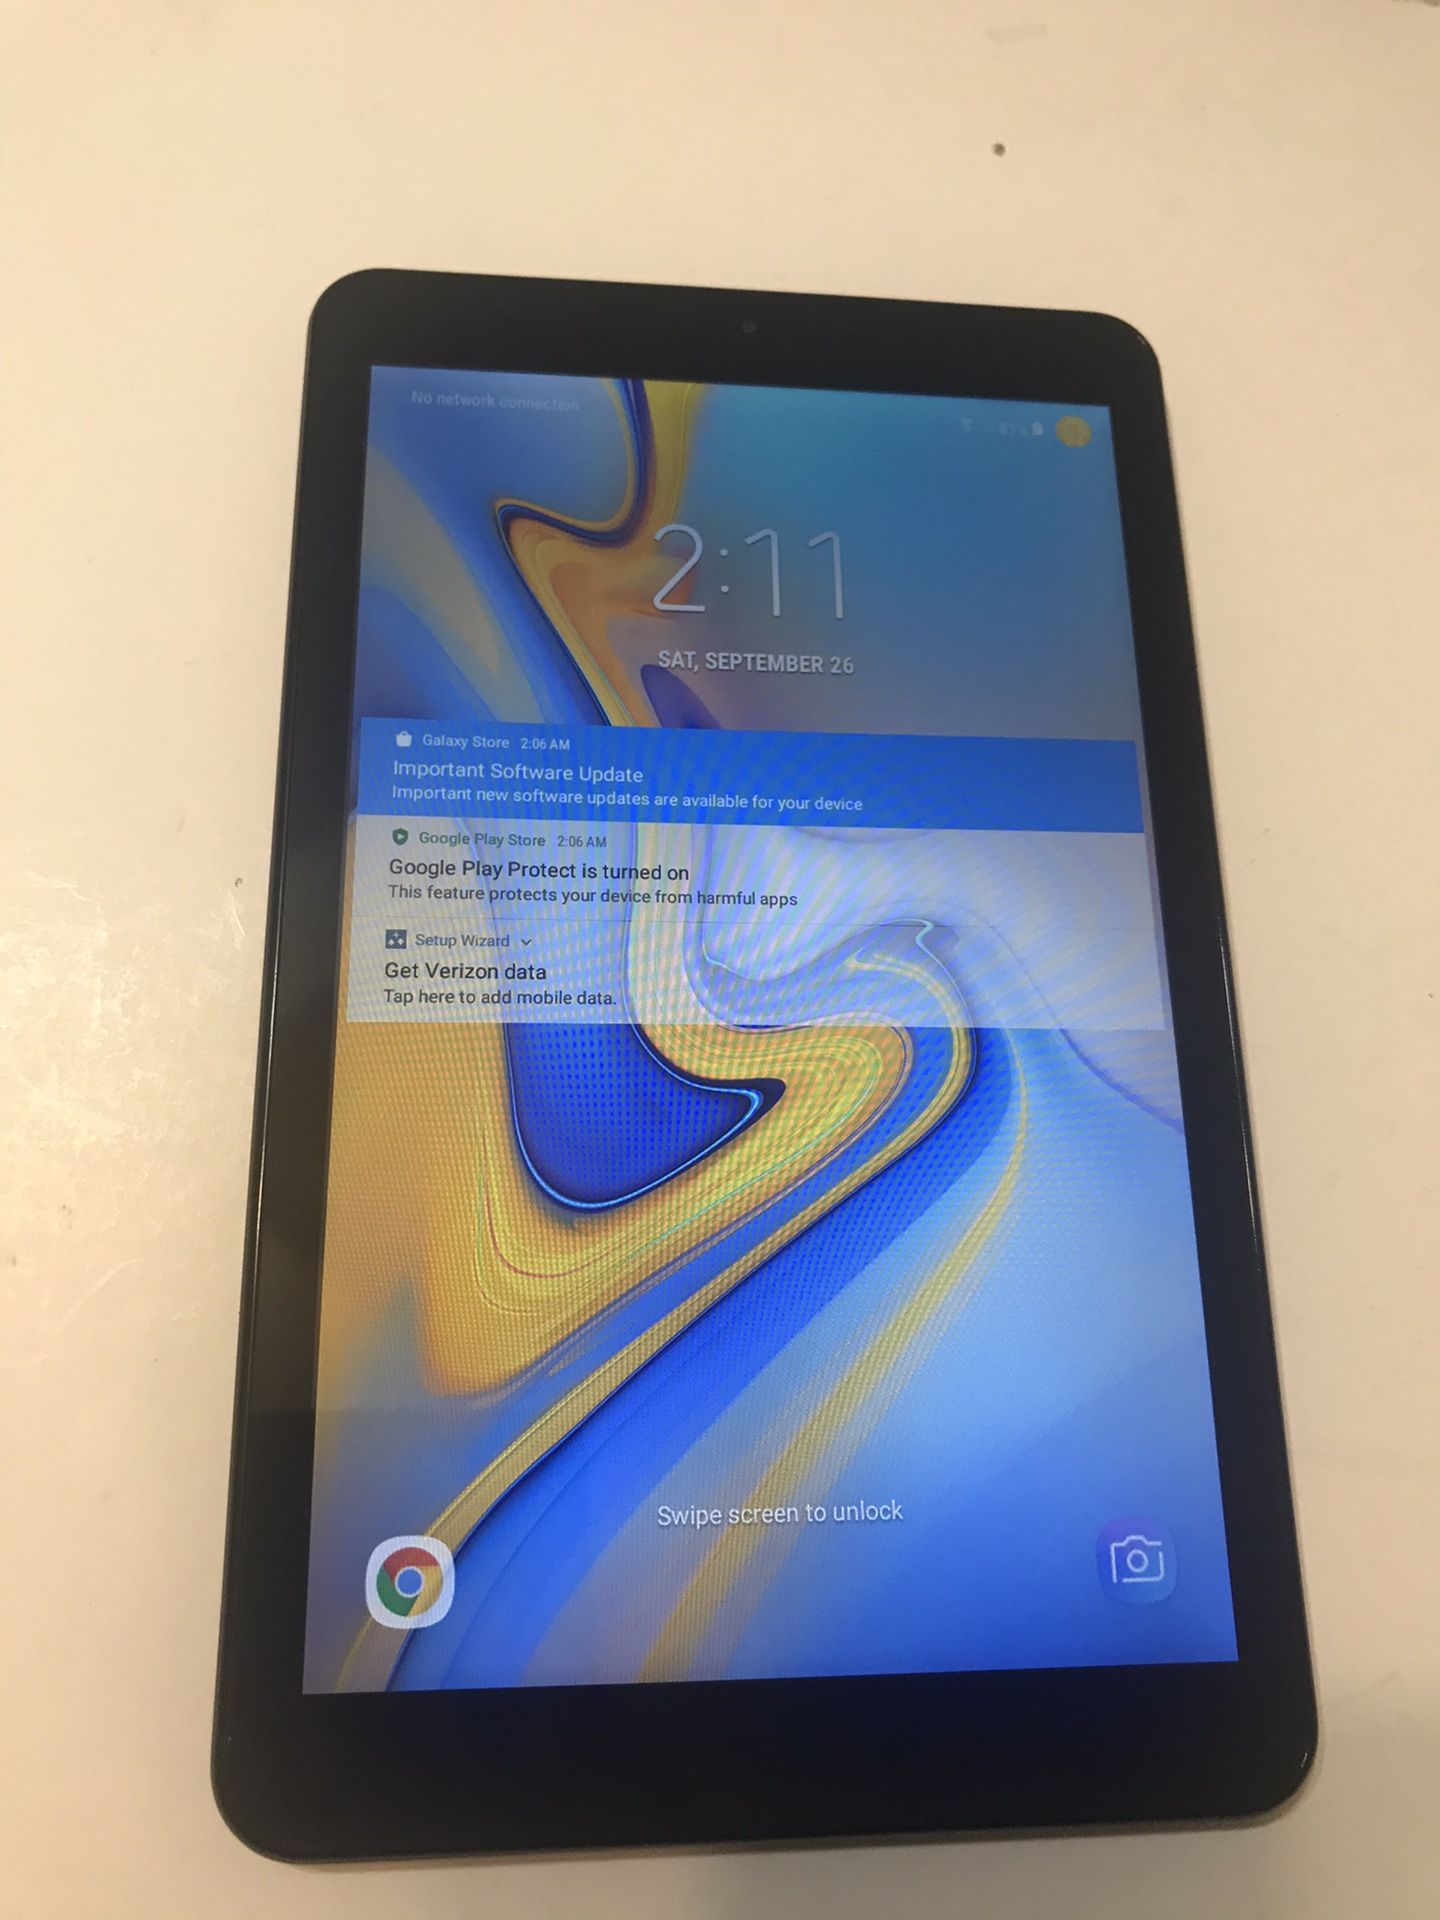 Samsung Galaxy Tab A 8" Tablet | 32 GB | VERIZON | WiFi Tested SM-T387V